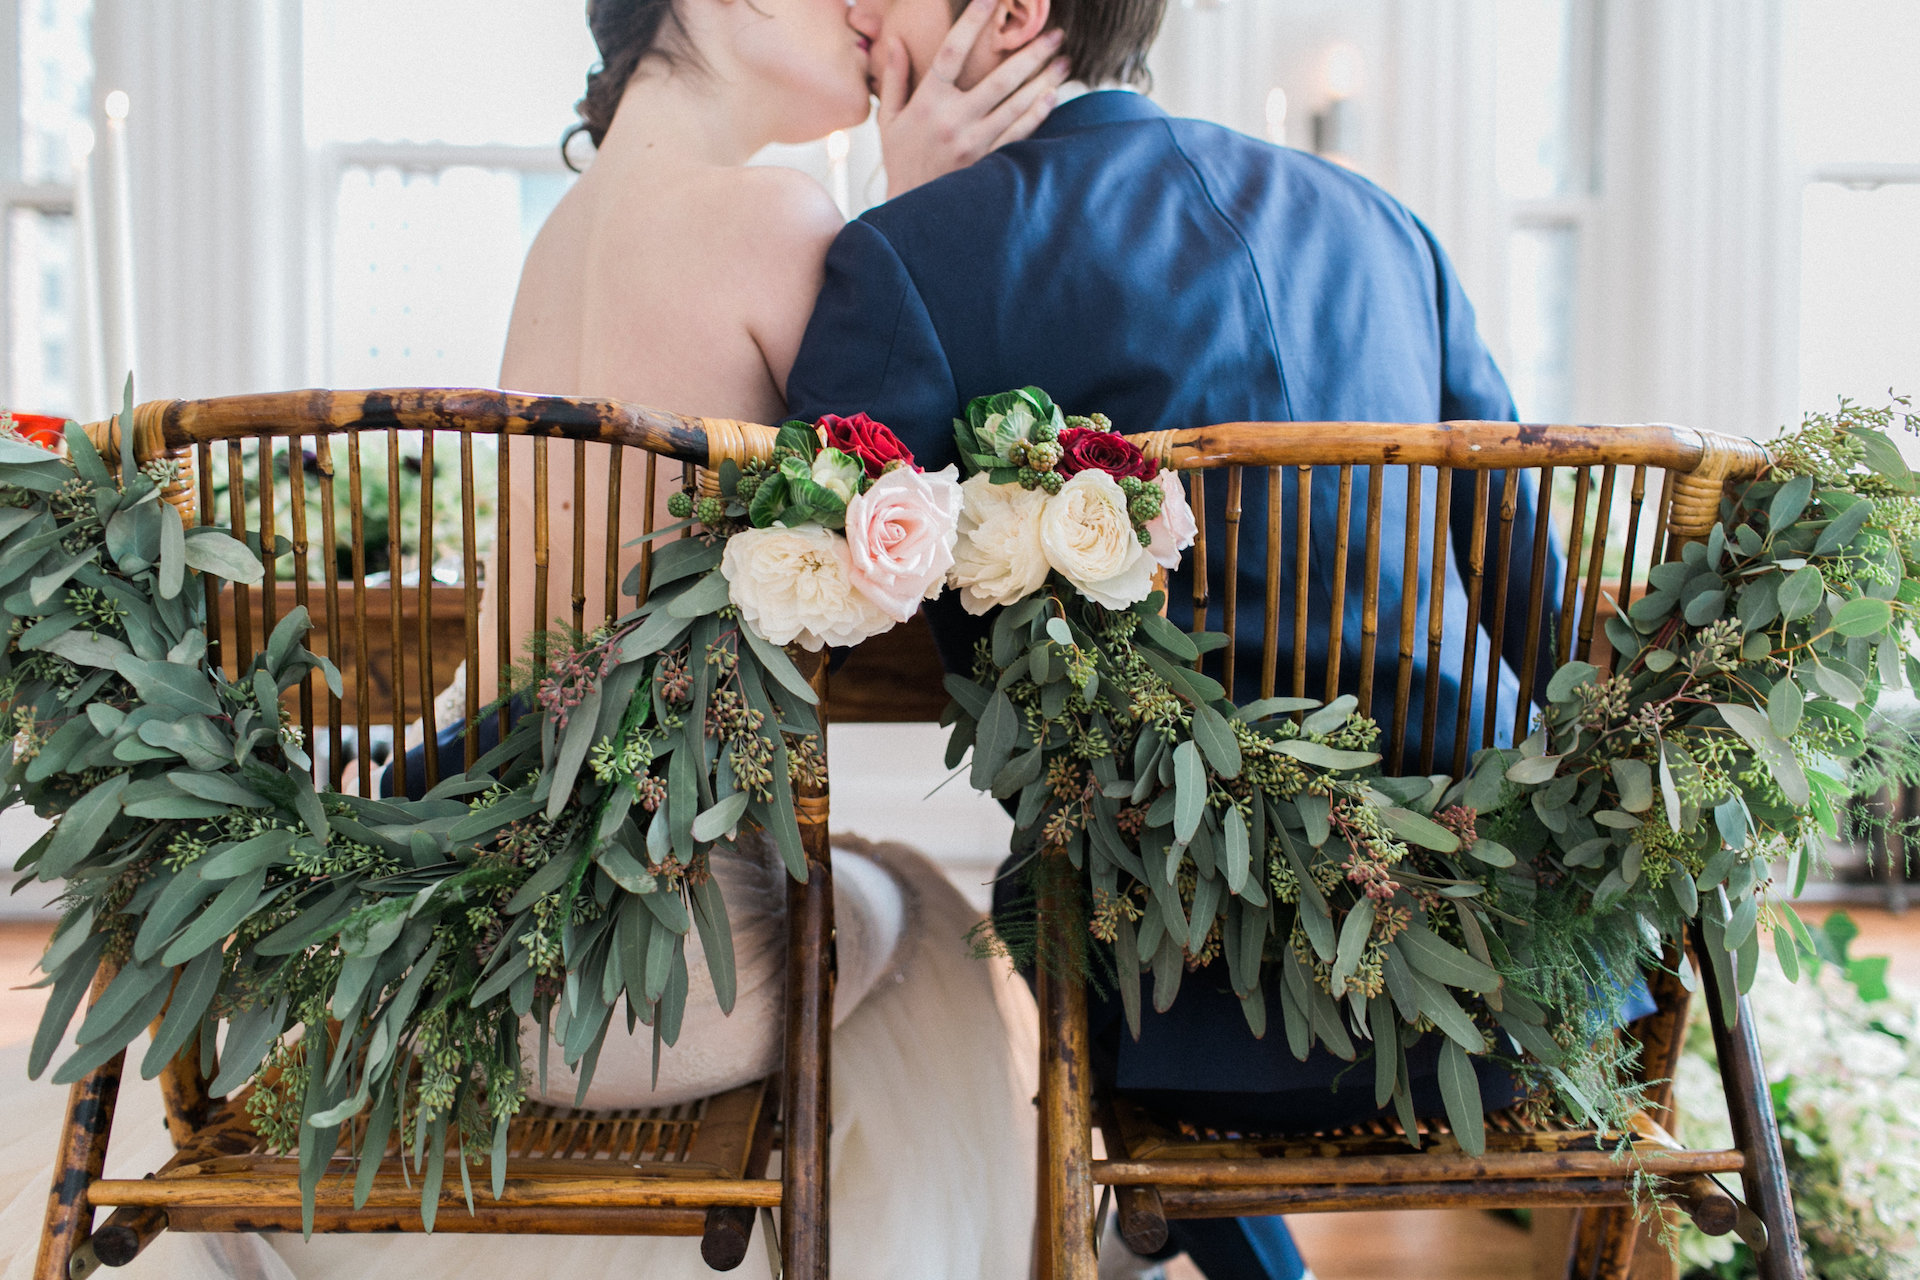 ©Alexis June Weddings, 2015 // Carnegie Hall Inspiration Shoot